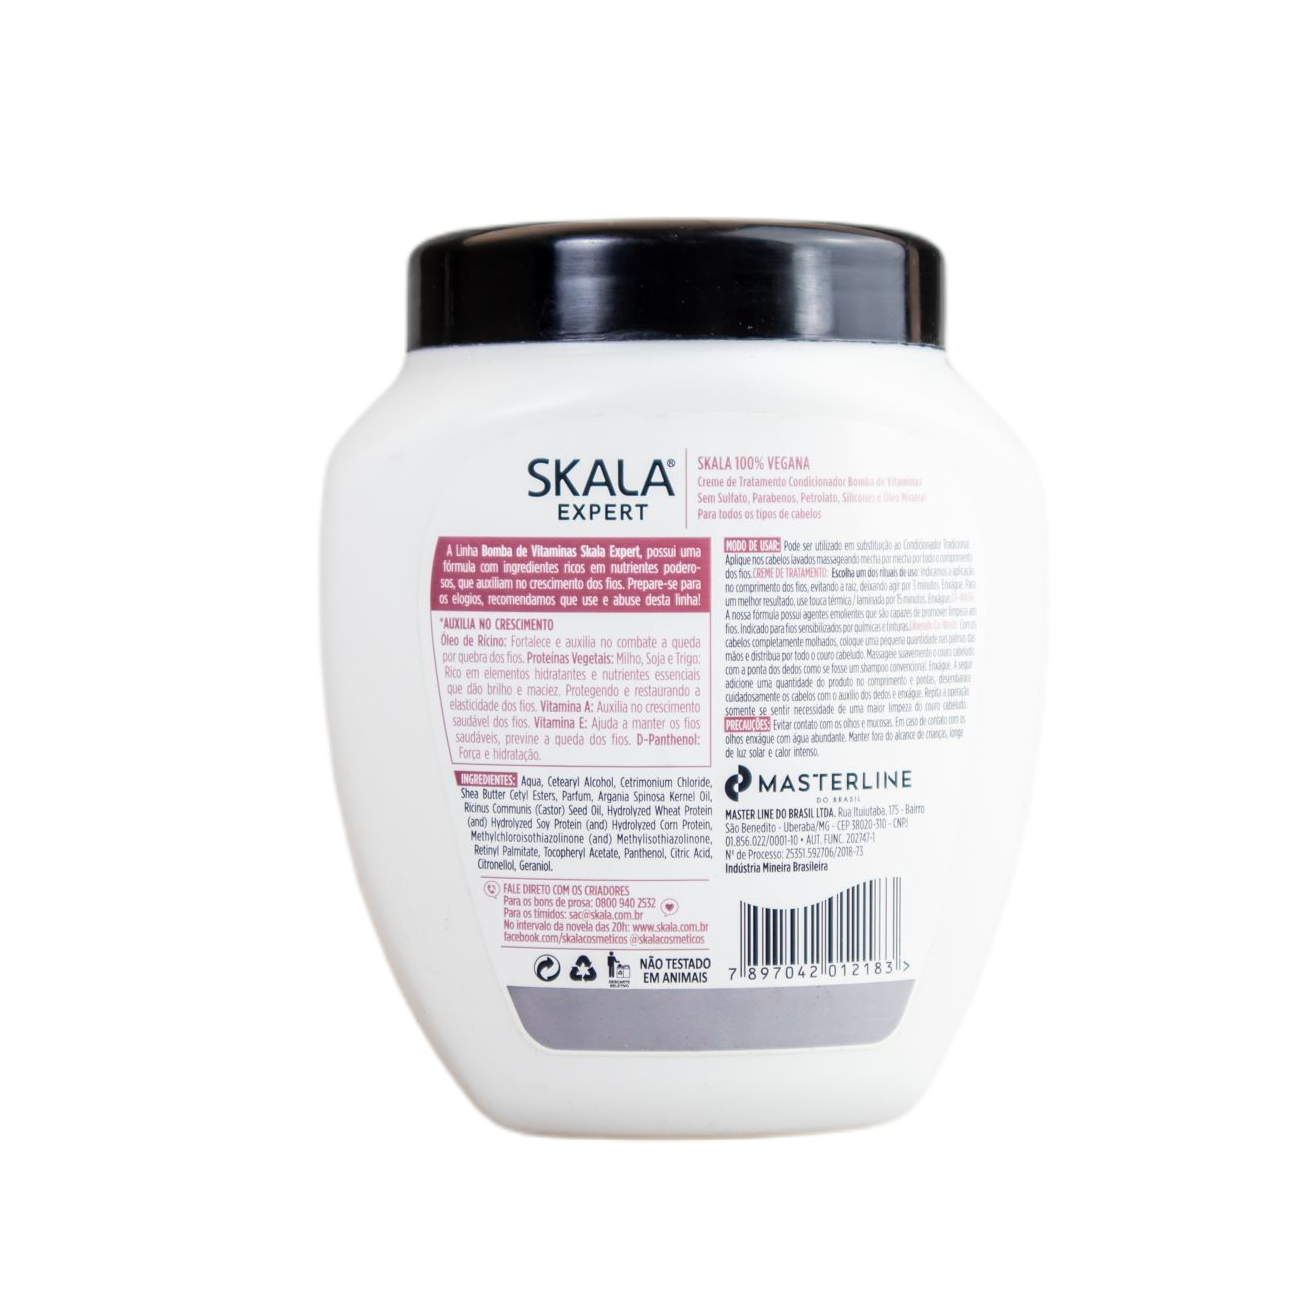 Skala Treatment Cream Creme De Tratamento Bomba De Vitaminas / Cream Pump Vitamins Treatment Treatment Cream - Skala